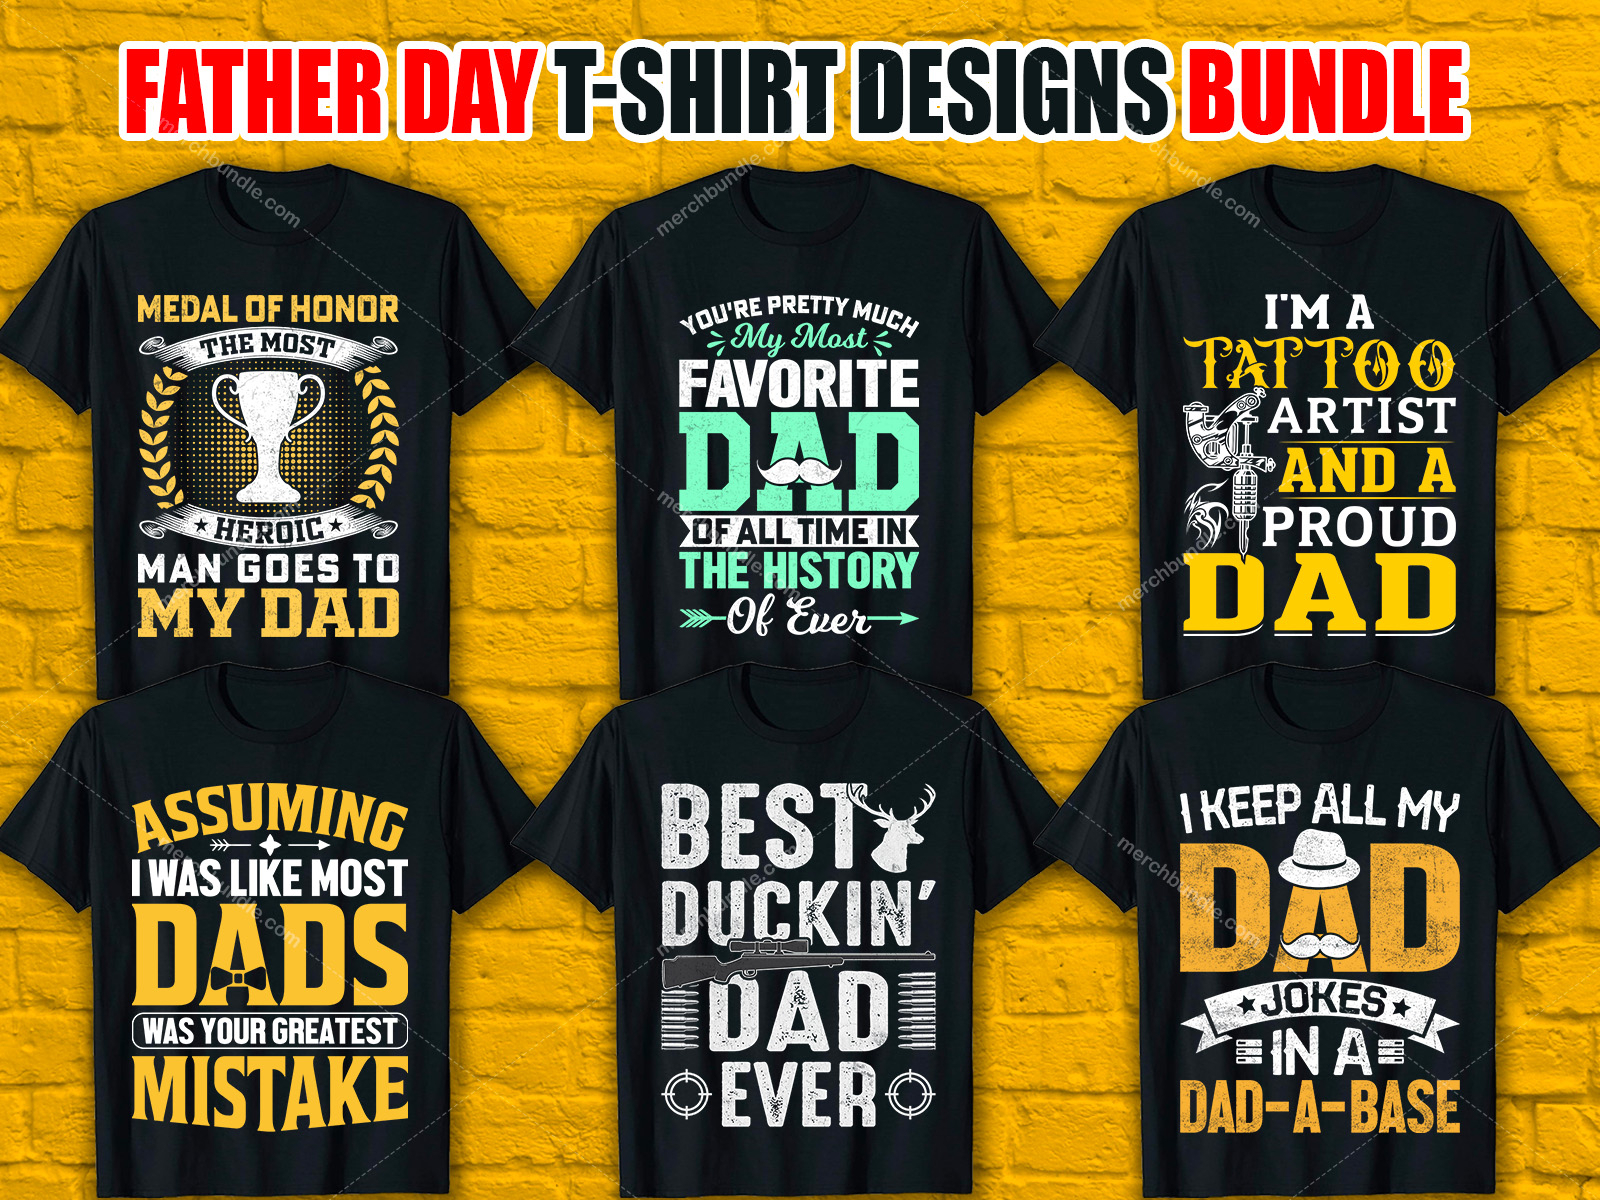 Father Day T-Shirt Design Bundle. by Ajmir Hossain on Dribbble